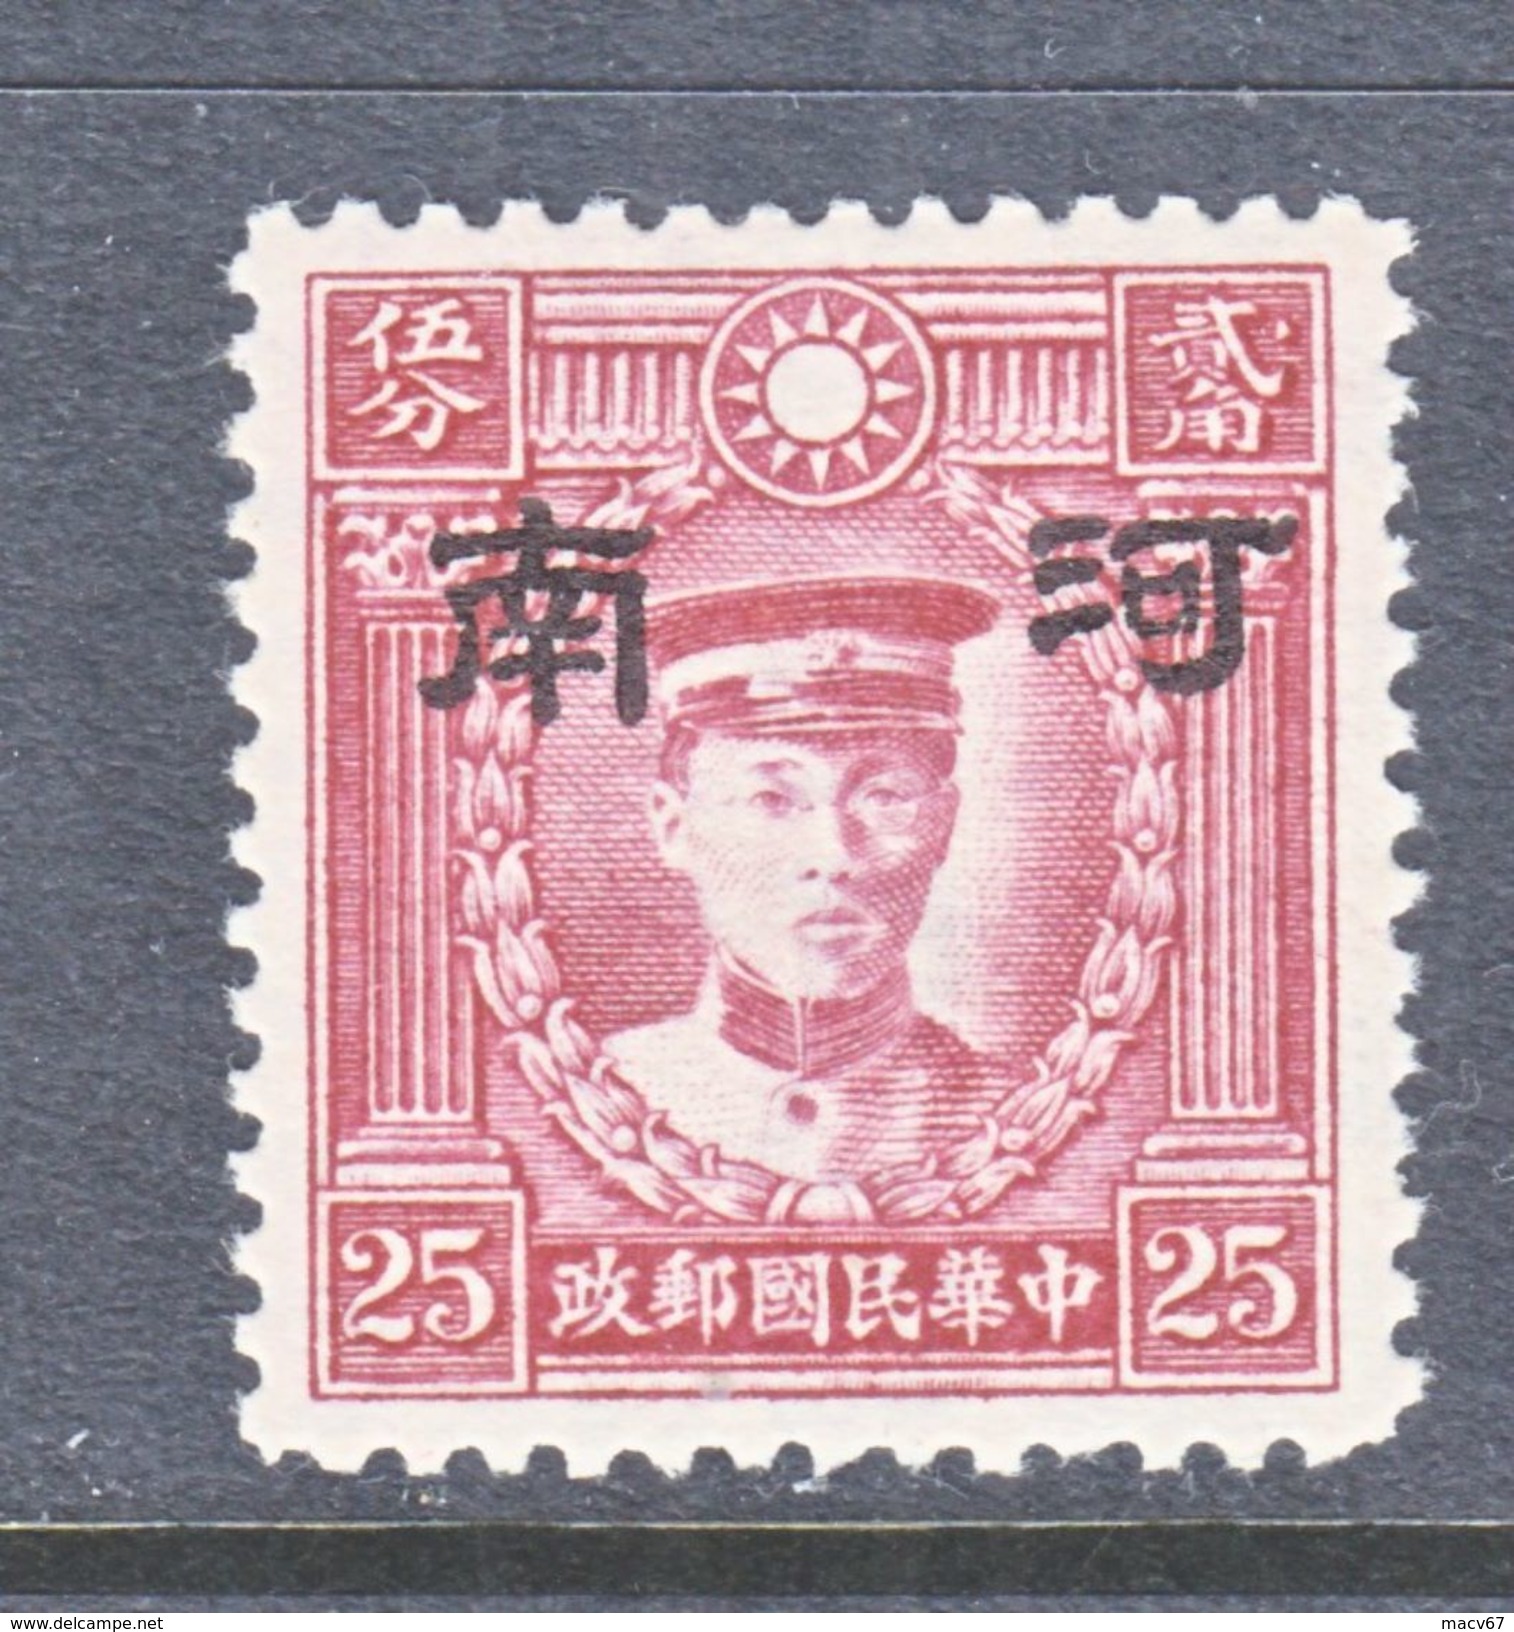 JAPANESE OCCUPATION   HONAN  3 N 40  Type  II  Perf. 12 1/2  SECRET  MARK    *  Wmk. 261 - 1941-45 Northern China